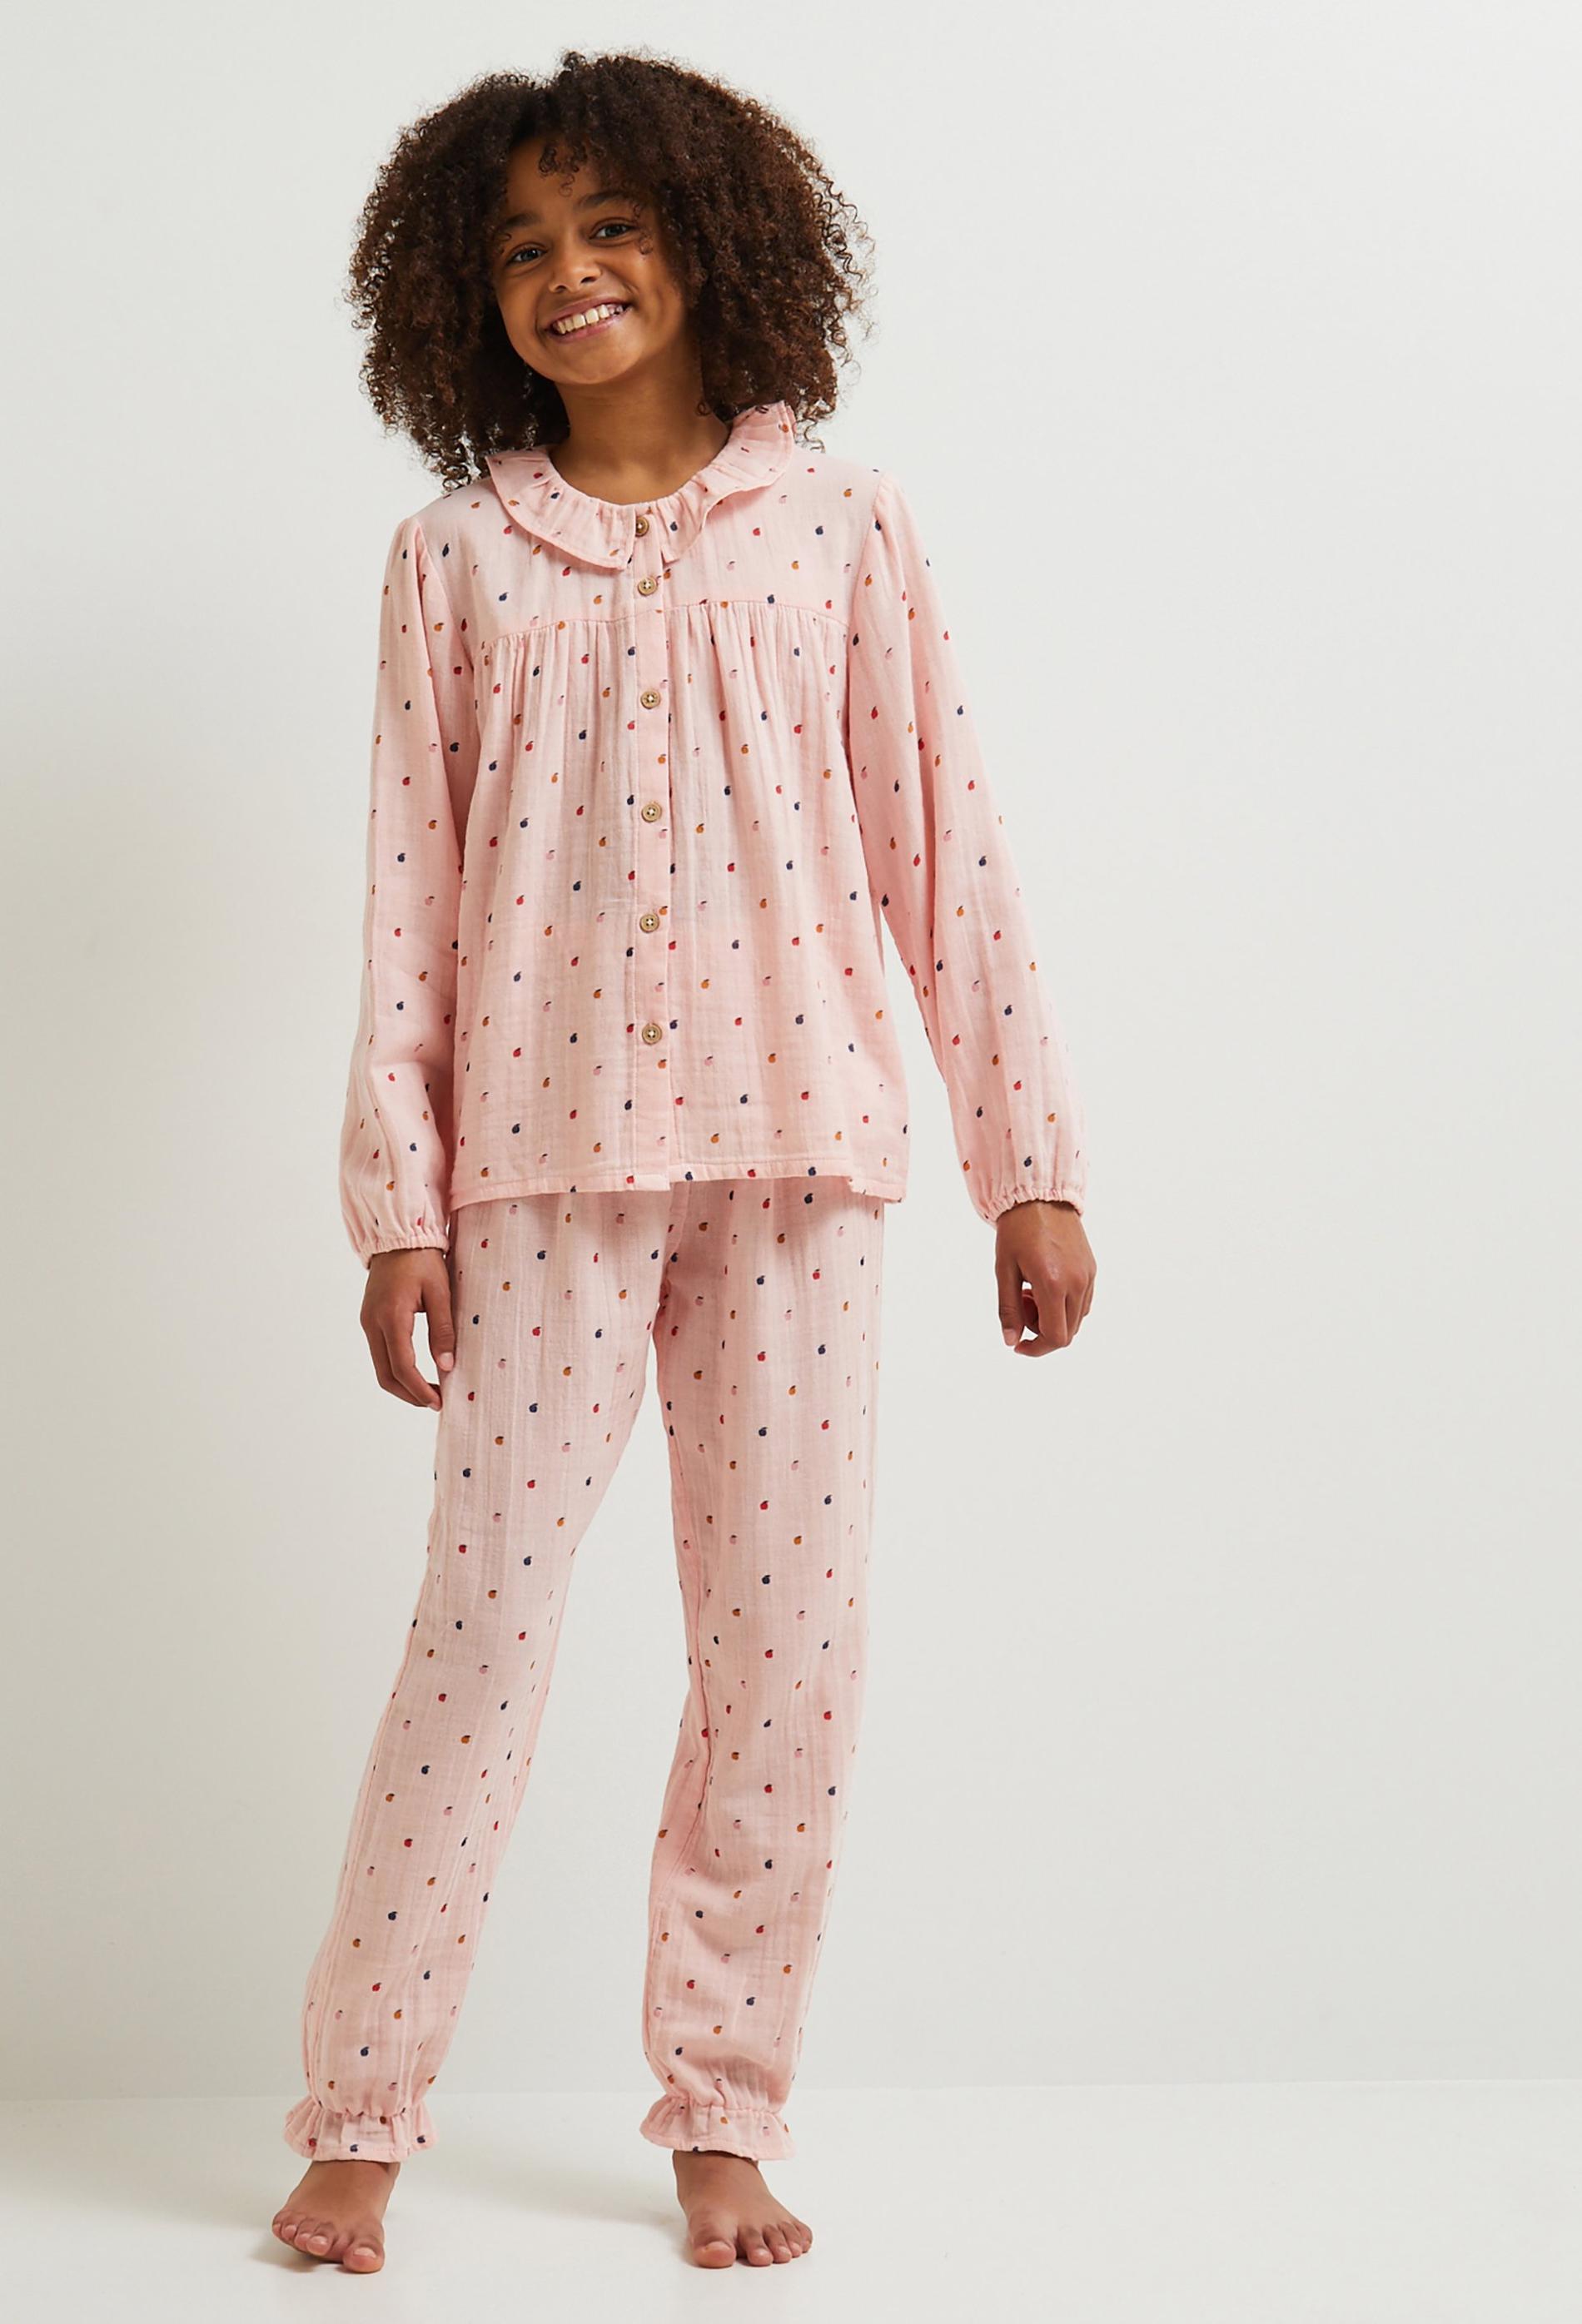 Pyjama long broderies pommes en gaze, BIO 3 ans rose clair